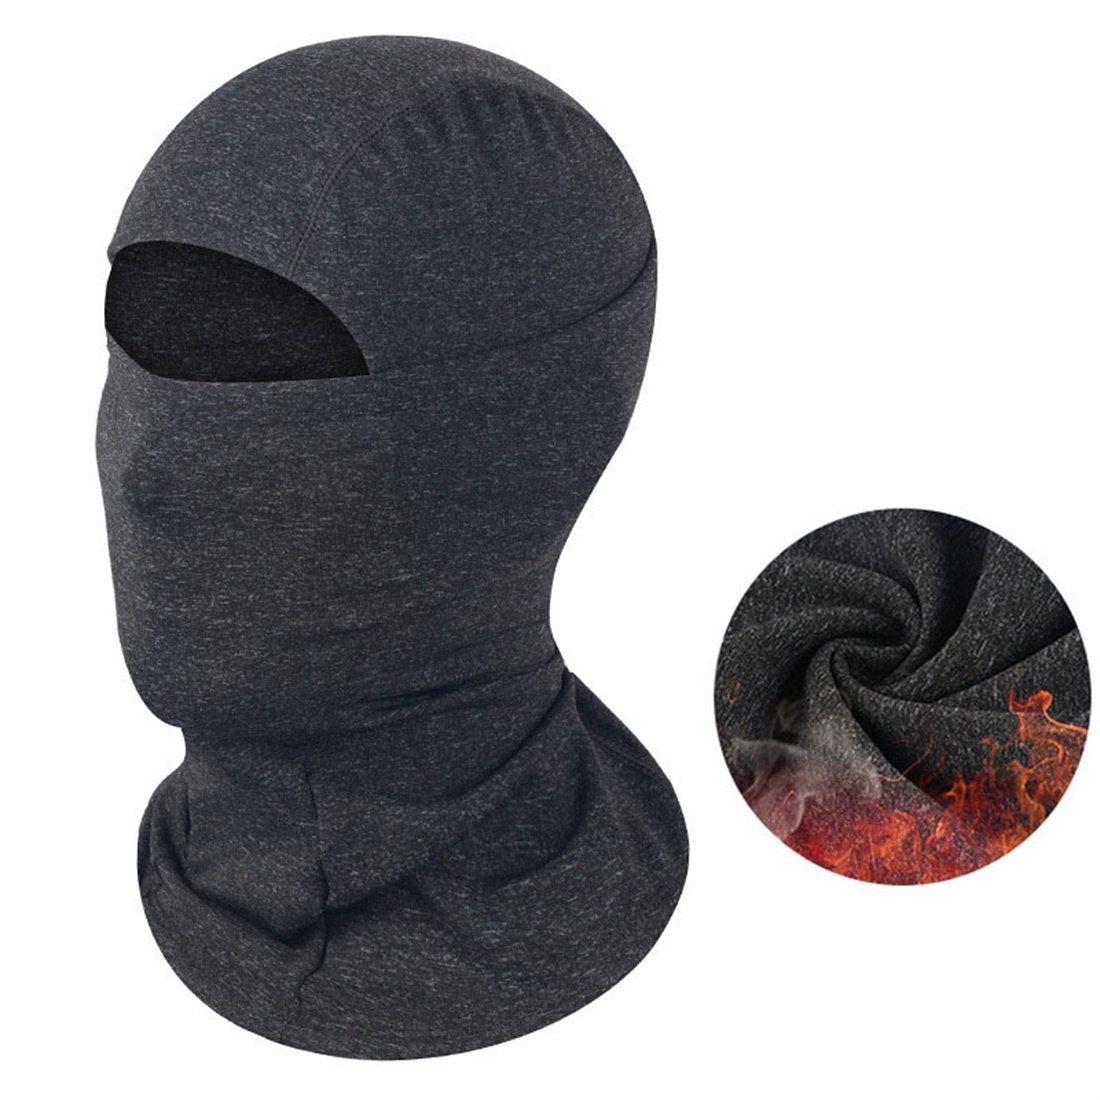 DÖRÖY Sturmhaube Winter Outdoor Kälteschutz Warm Ski Kopfbedeckung, Reiten Masken dunkelgrau